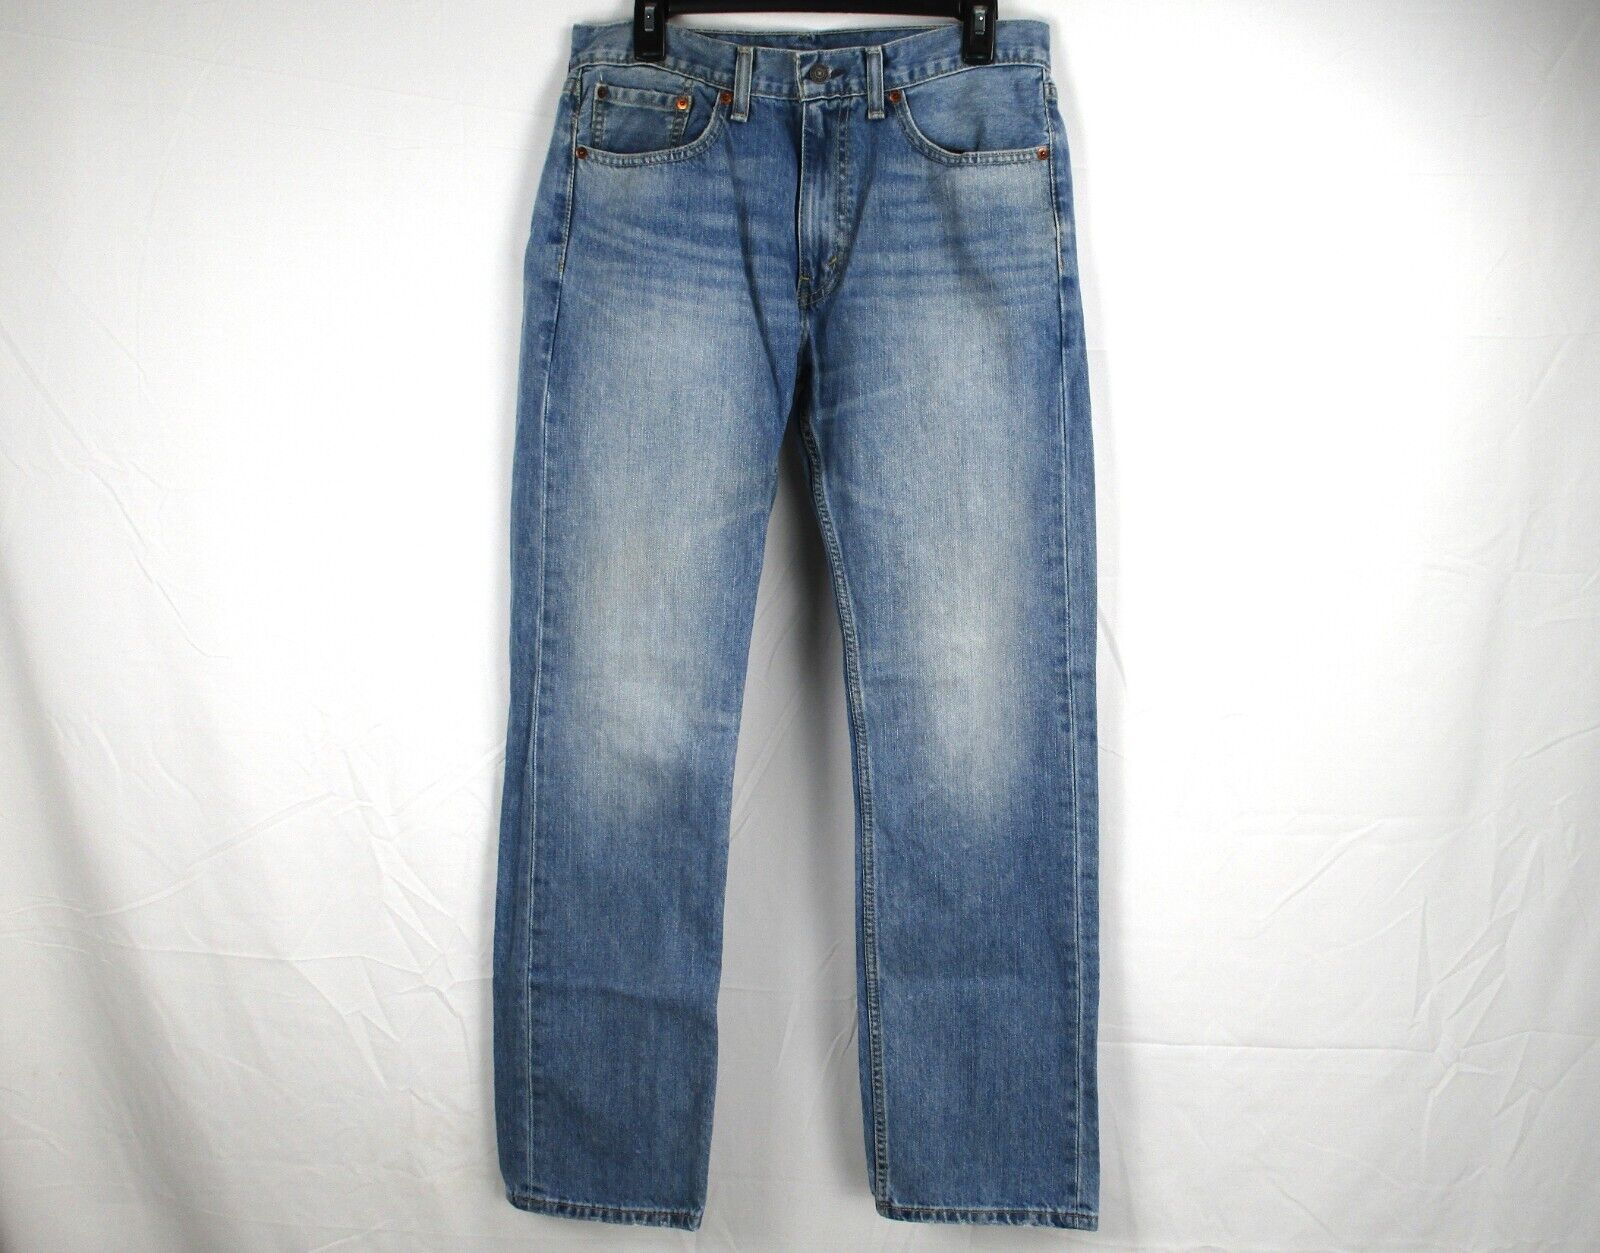 Primary image for Levi's® 505 Regular Fit Straight Leg Jeans Men's Sz 32 Waist x 32 Inseam Denim